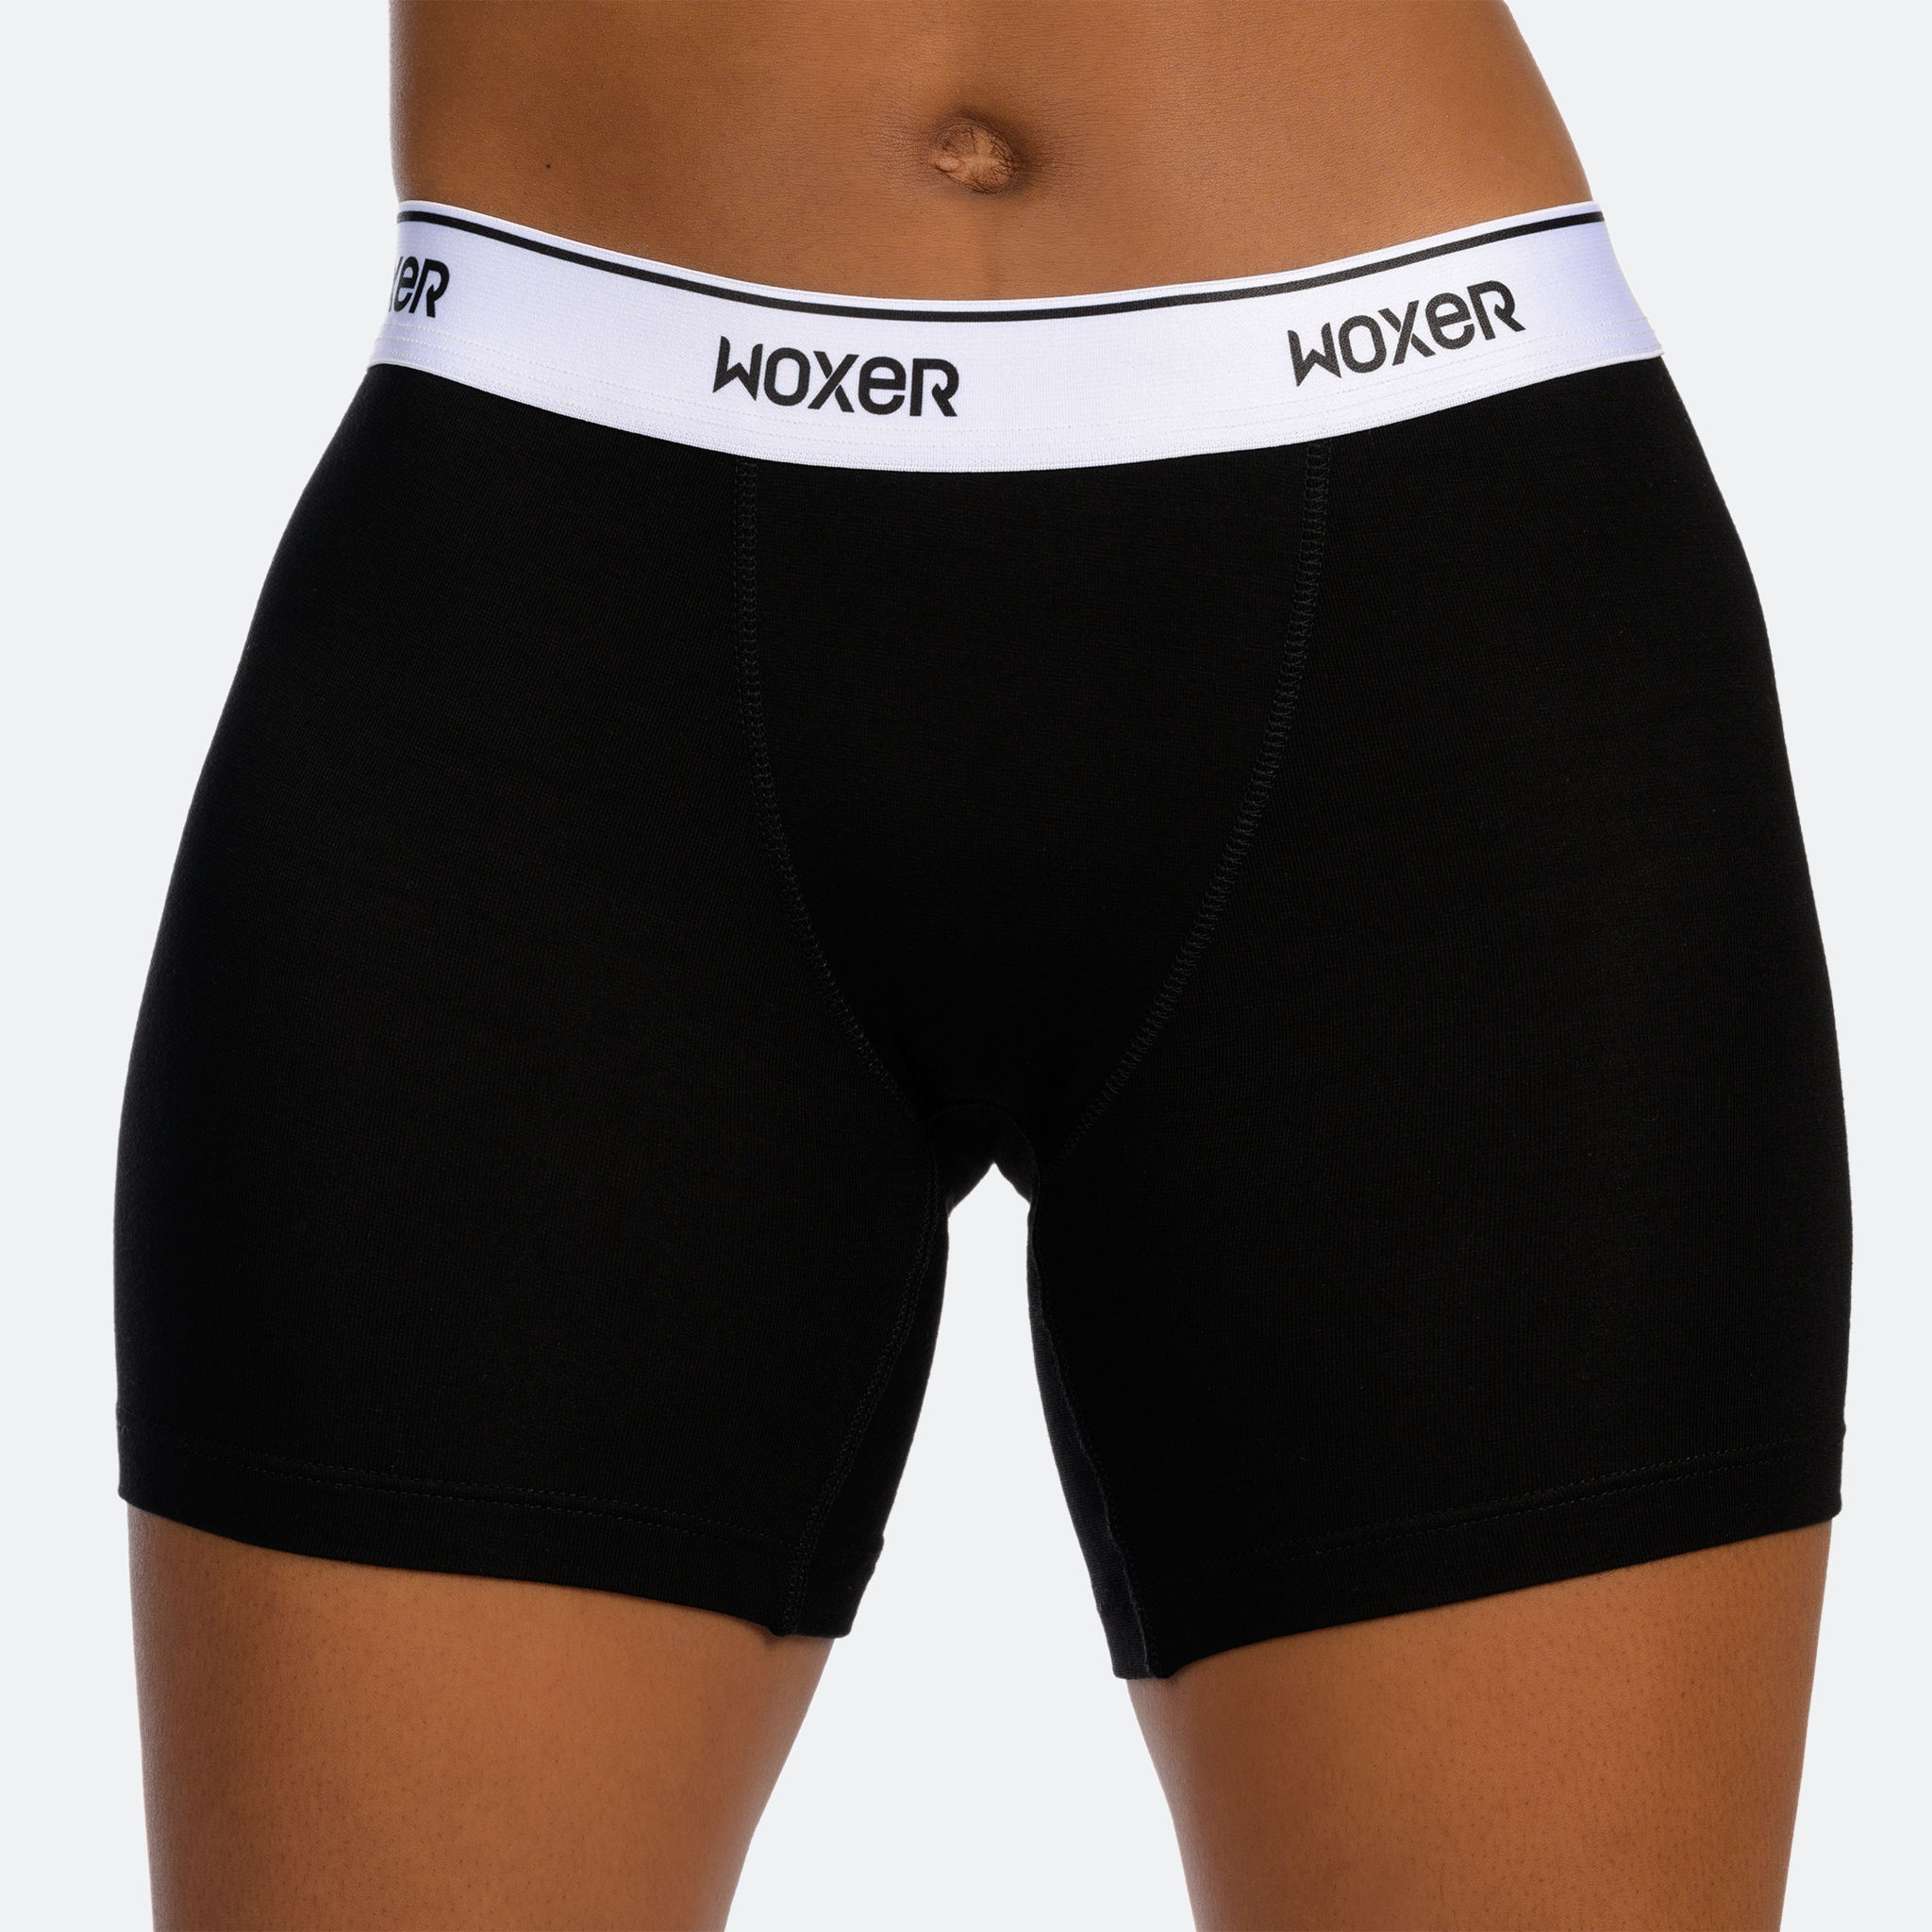 Woxer Womens Boxer Briefs Underwear Unleash Your Potential, Baller